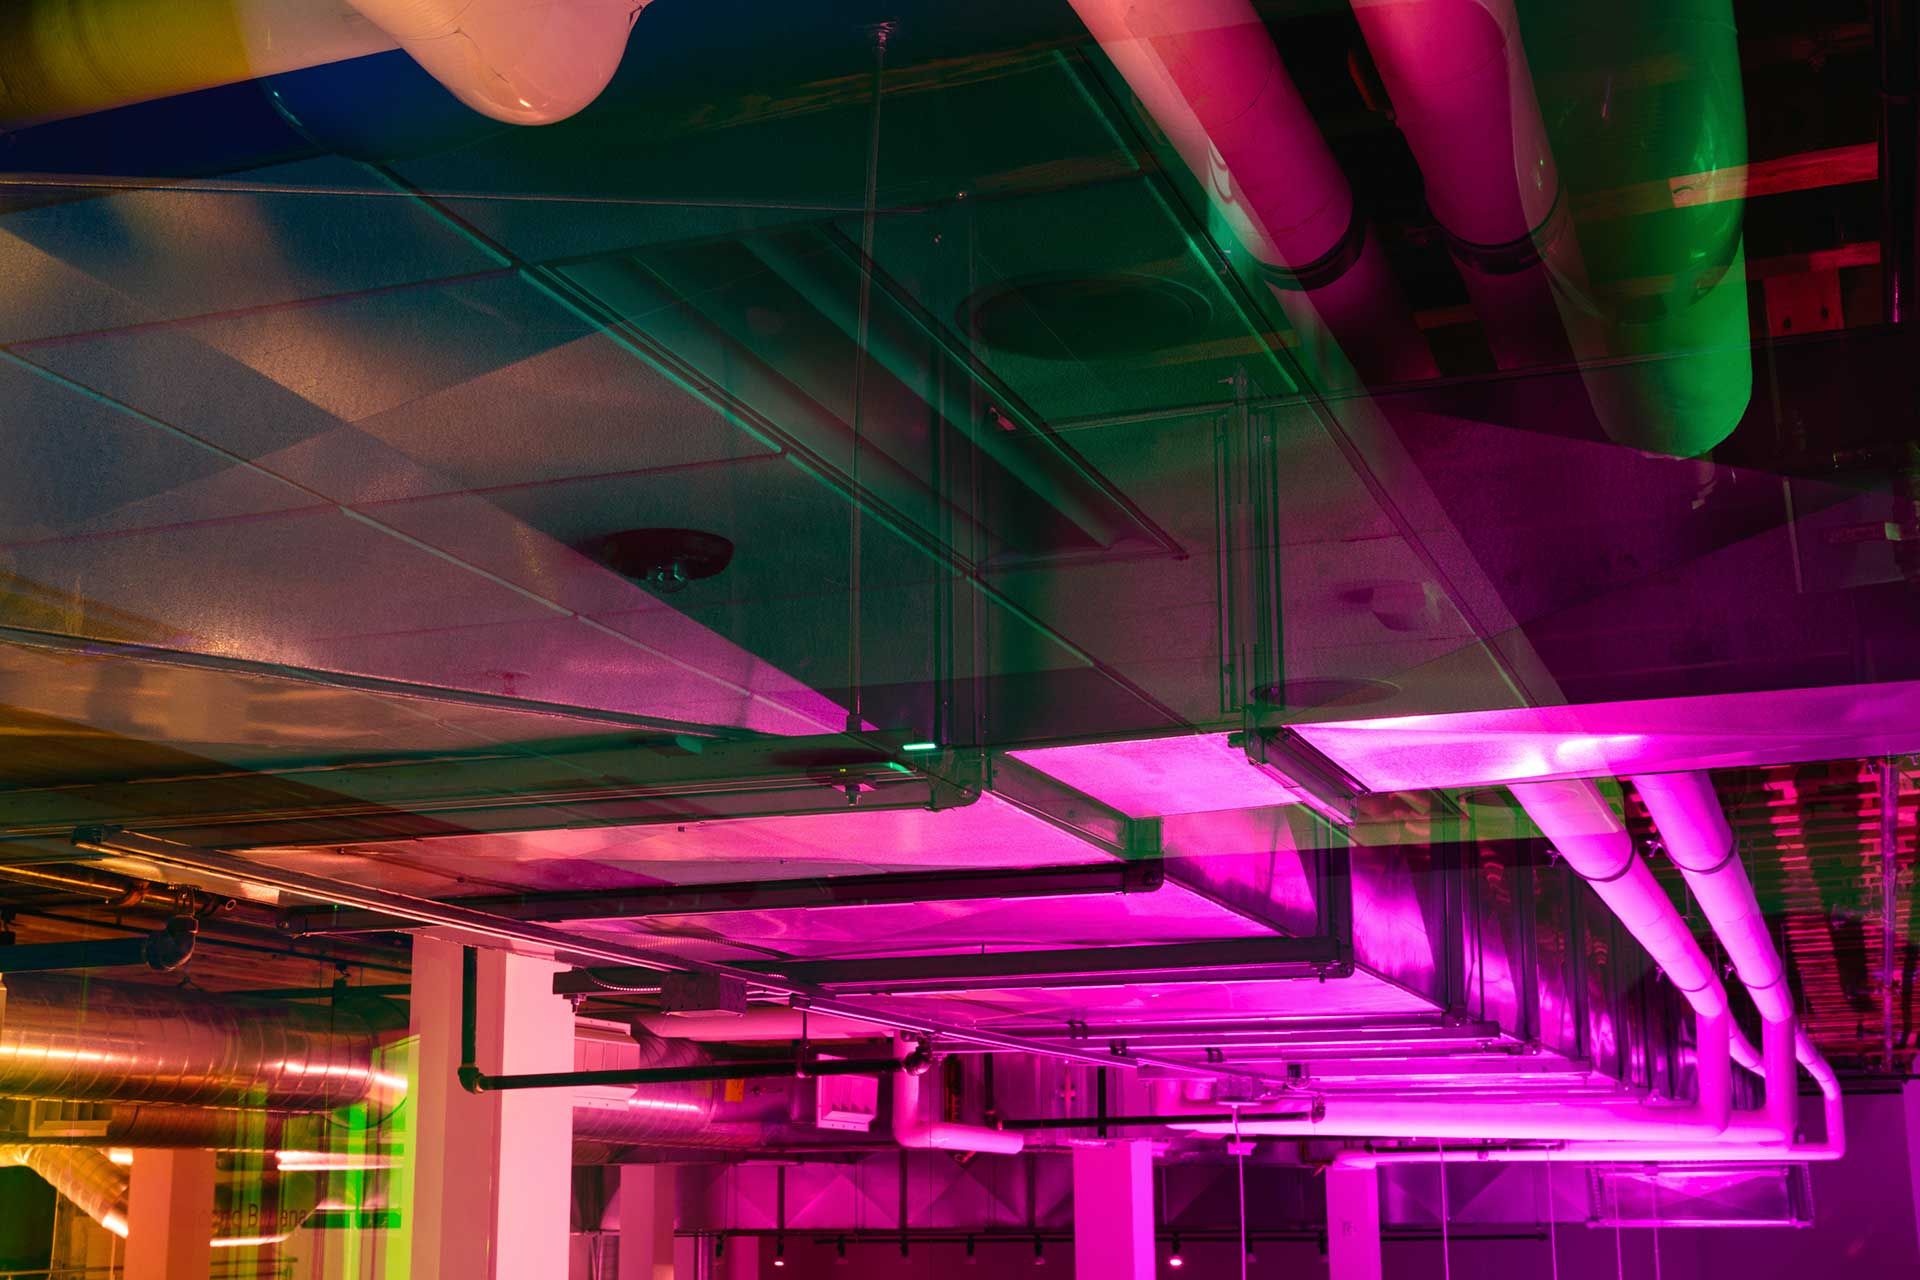 Luz rosa projetada no teto mostrando dutos de ar condicionado